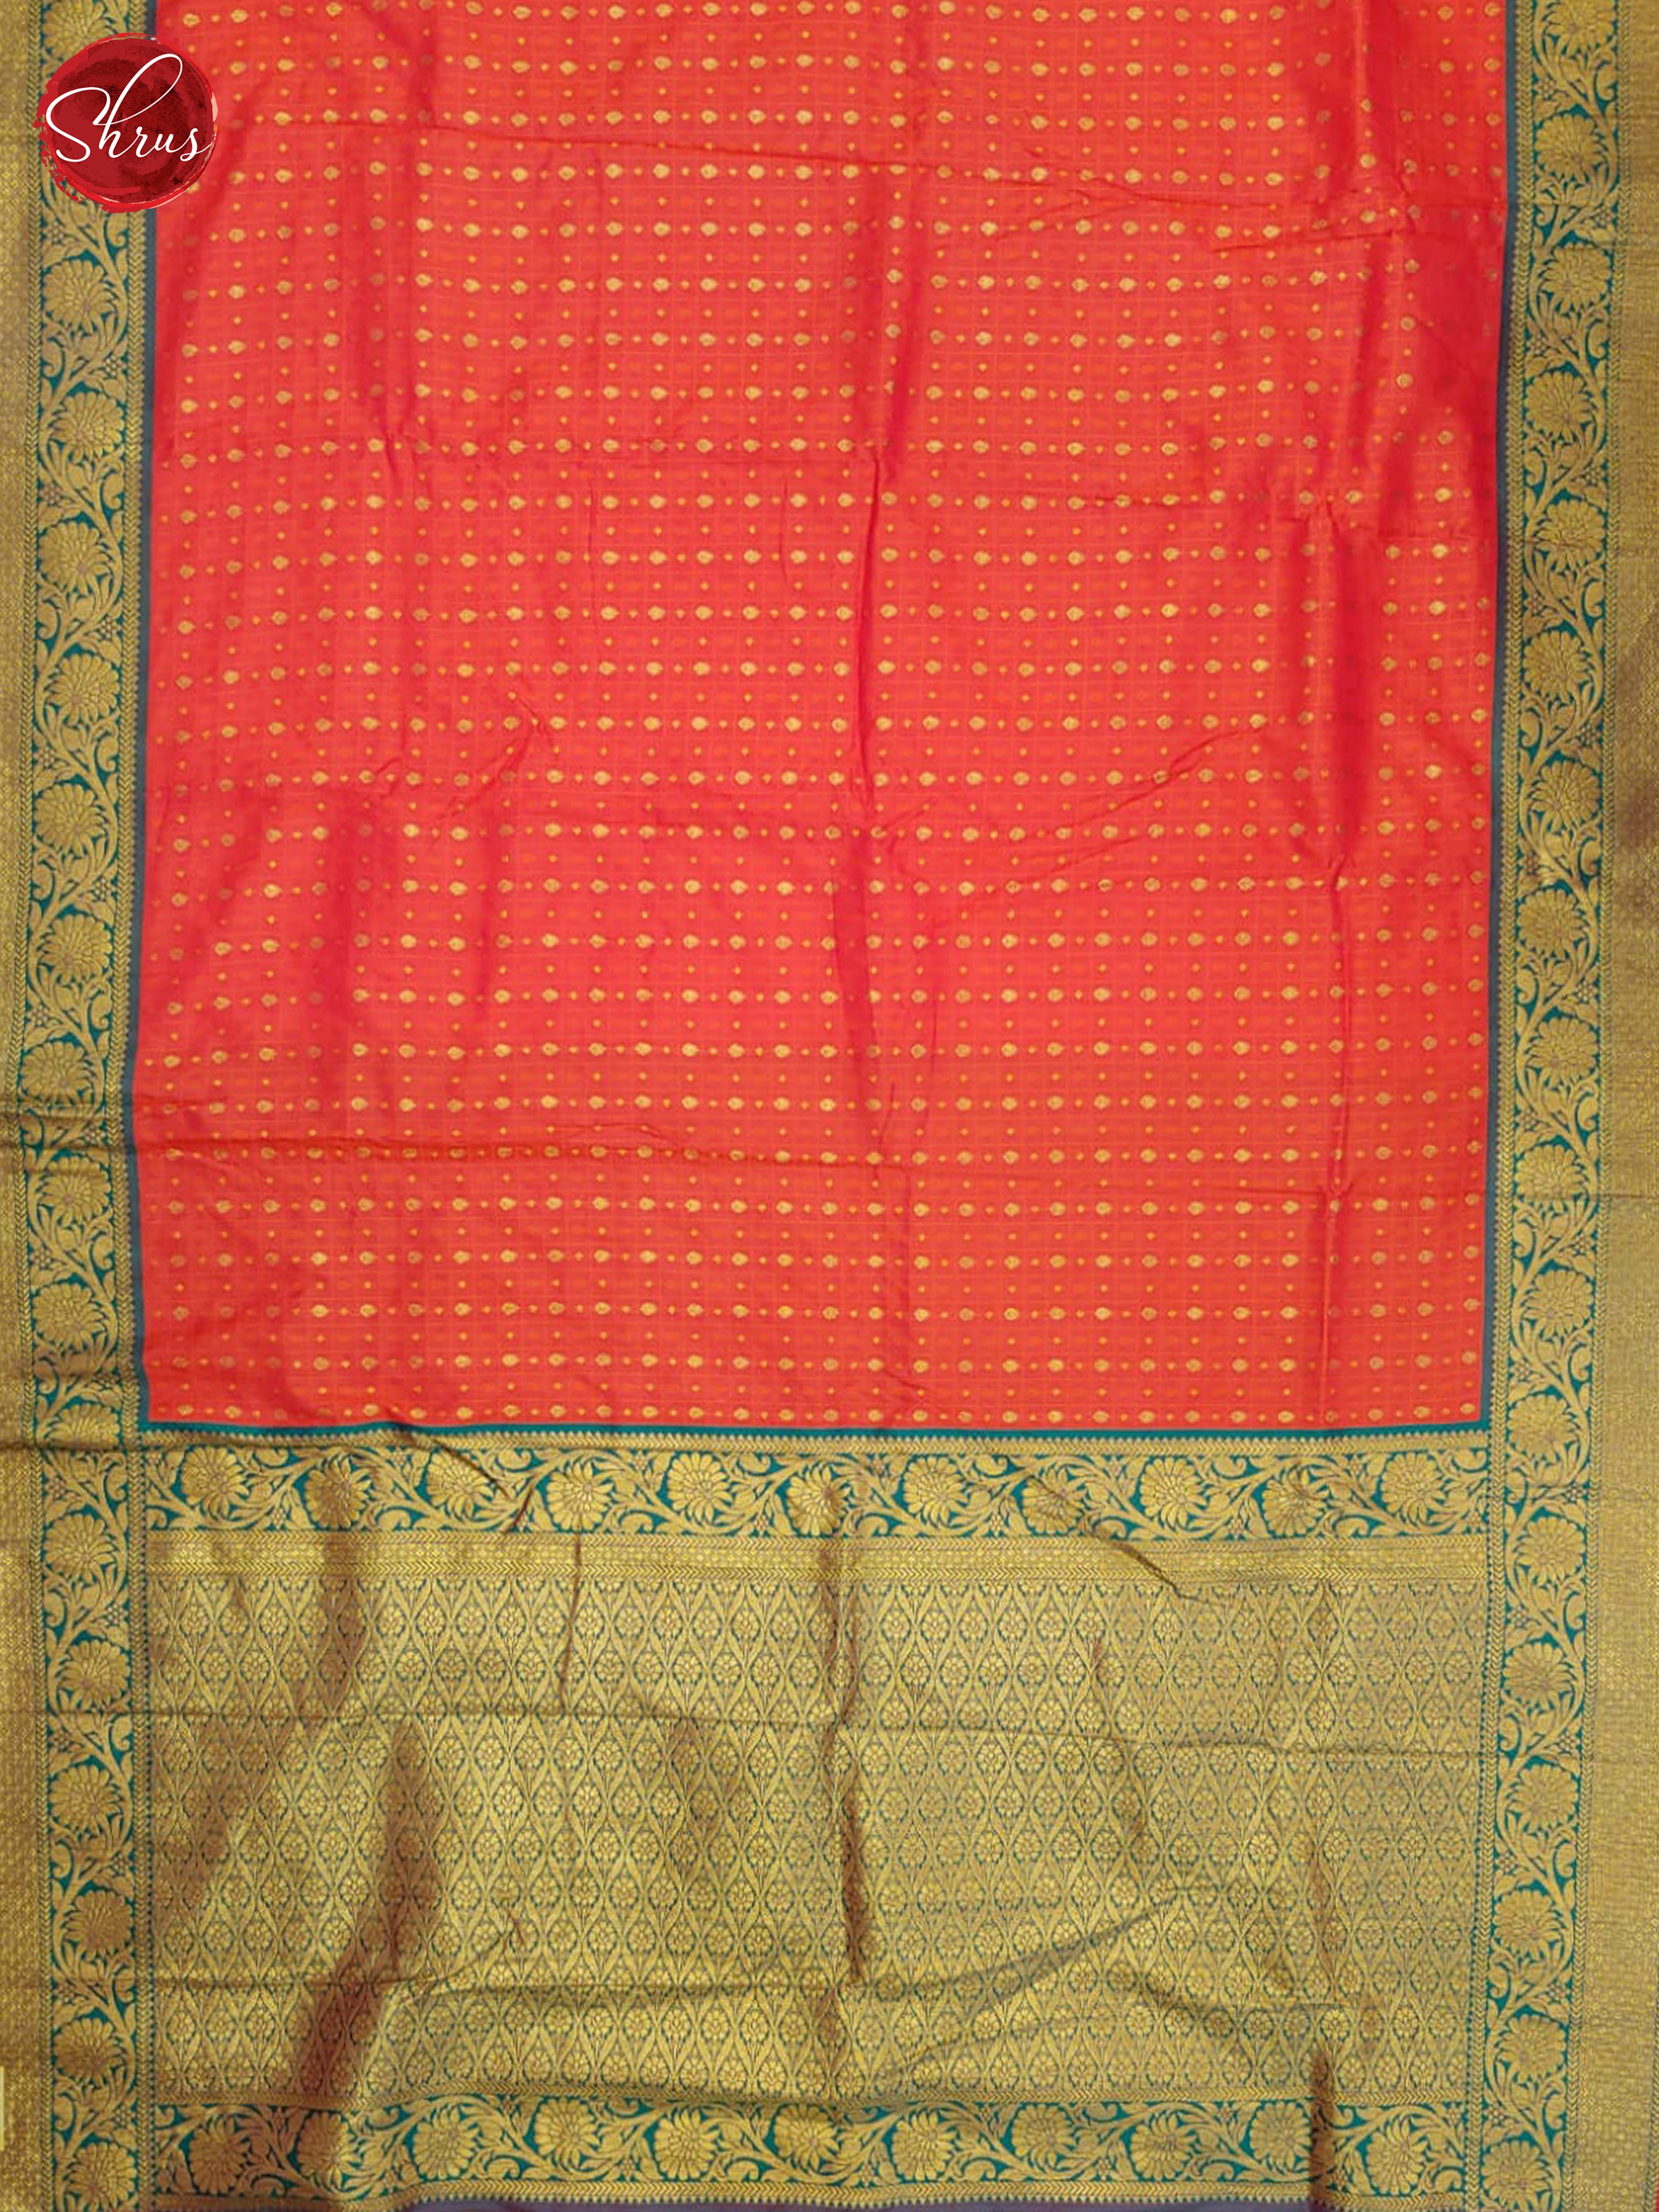 Orangish Pink & Green - Semi kanchipuram saree - Shop on ShrusEternity.com